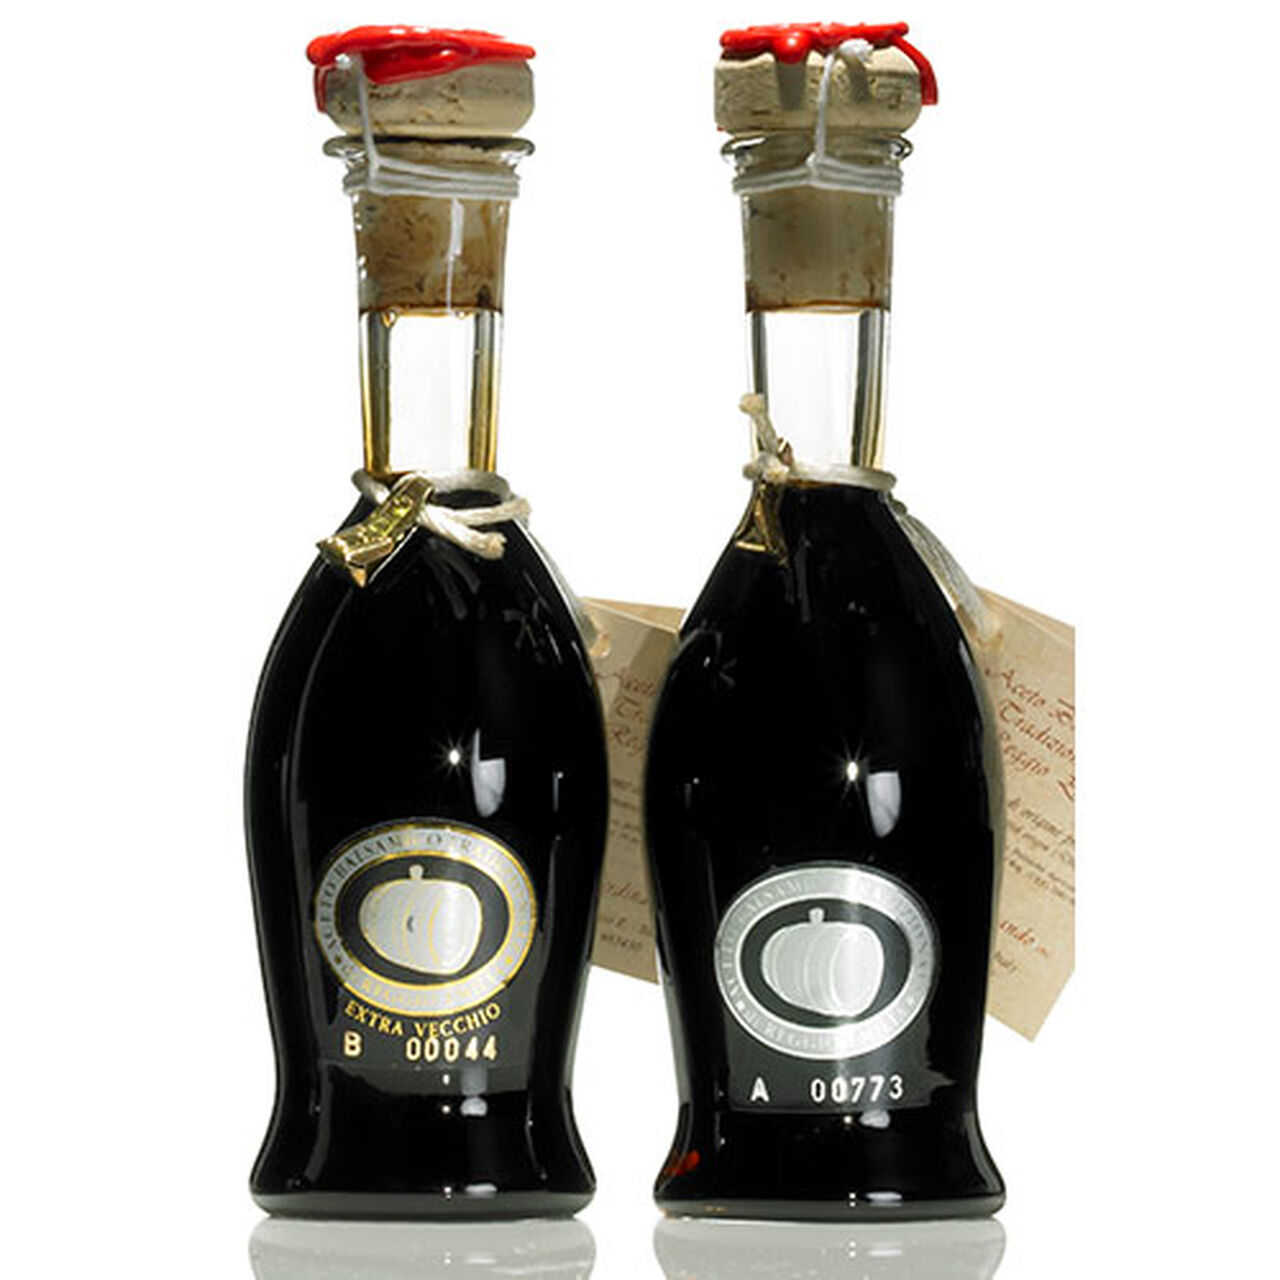 Cavalli Tradizionale Balsamic Vinegar, , large image number 0